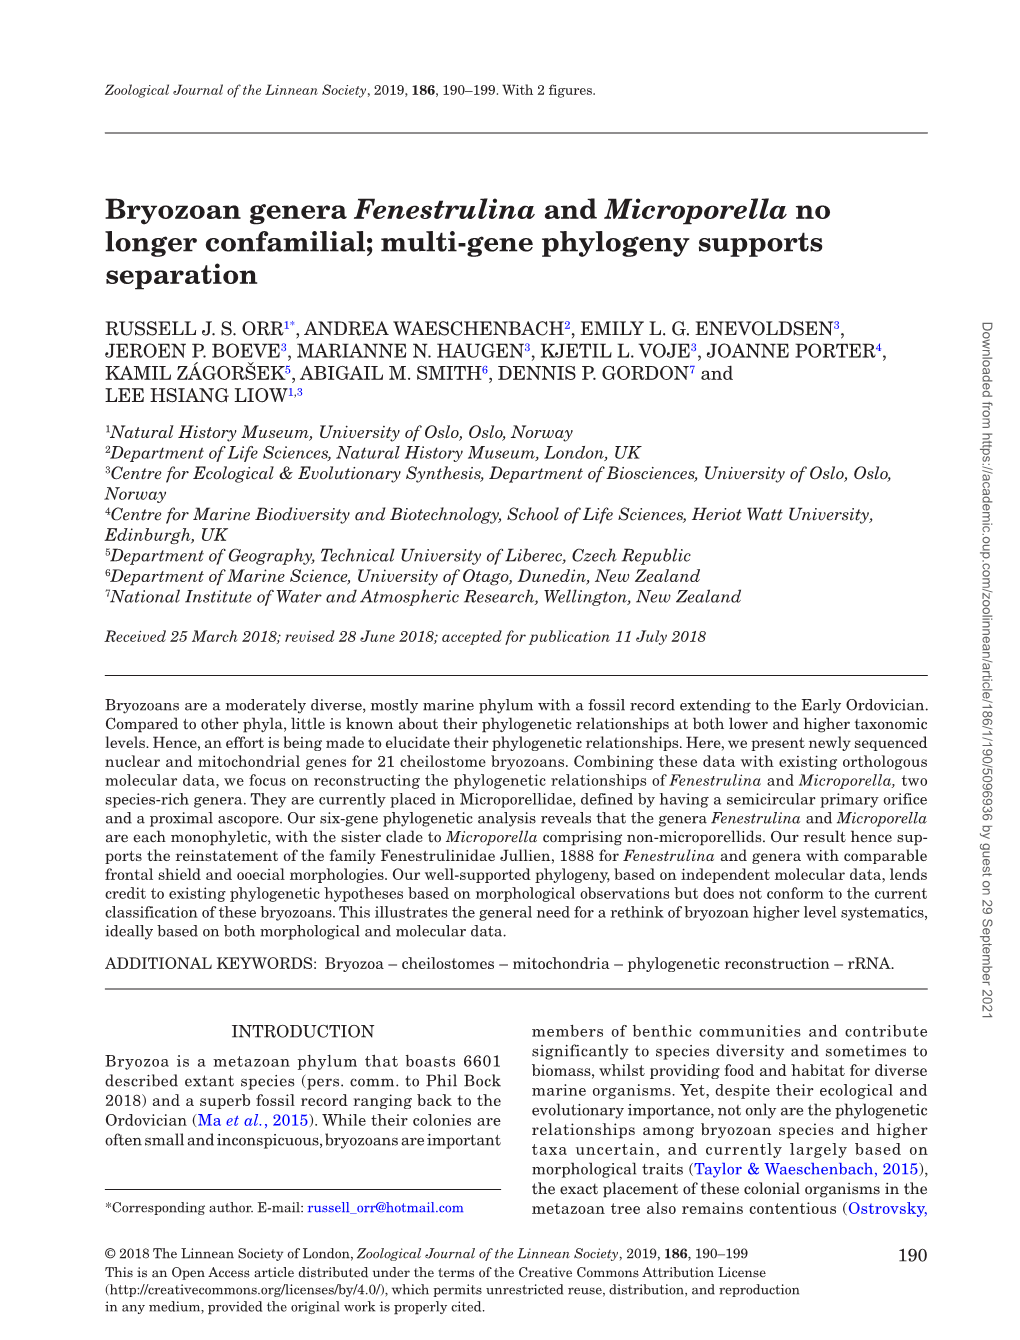 Bryozoan Genera Fenestrulina and Microporella No Longer Confamilial; Multi-Gene Phylogeny Supports Separation